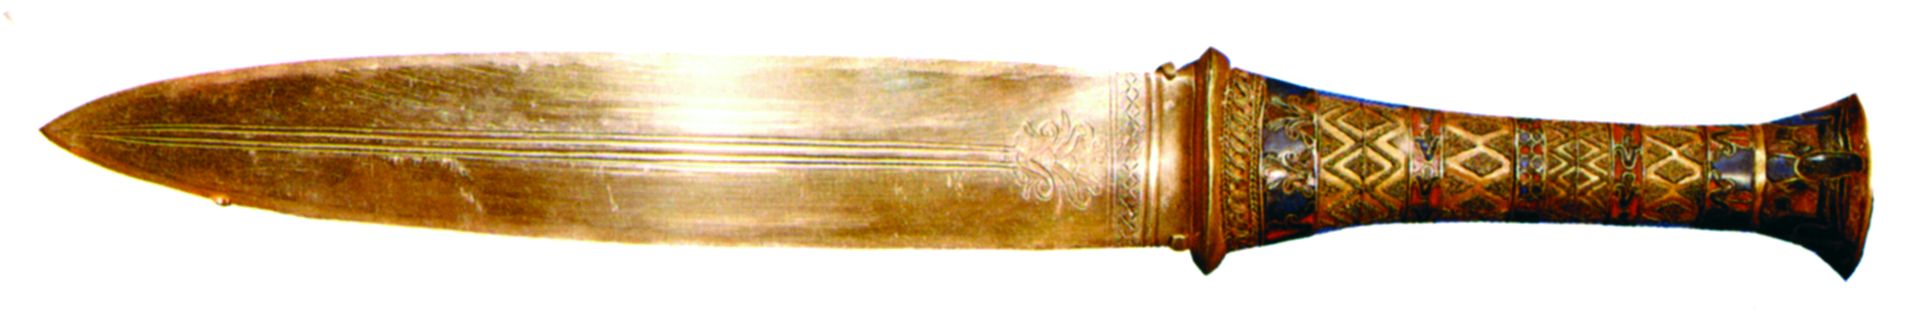 A 14-century bc gold dagger from the tomb of Tutankhamen.